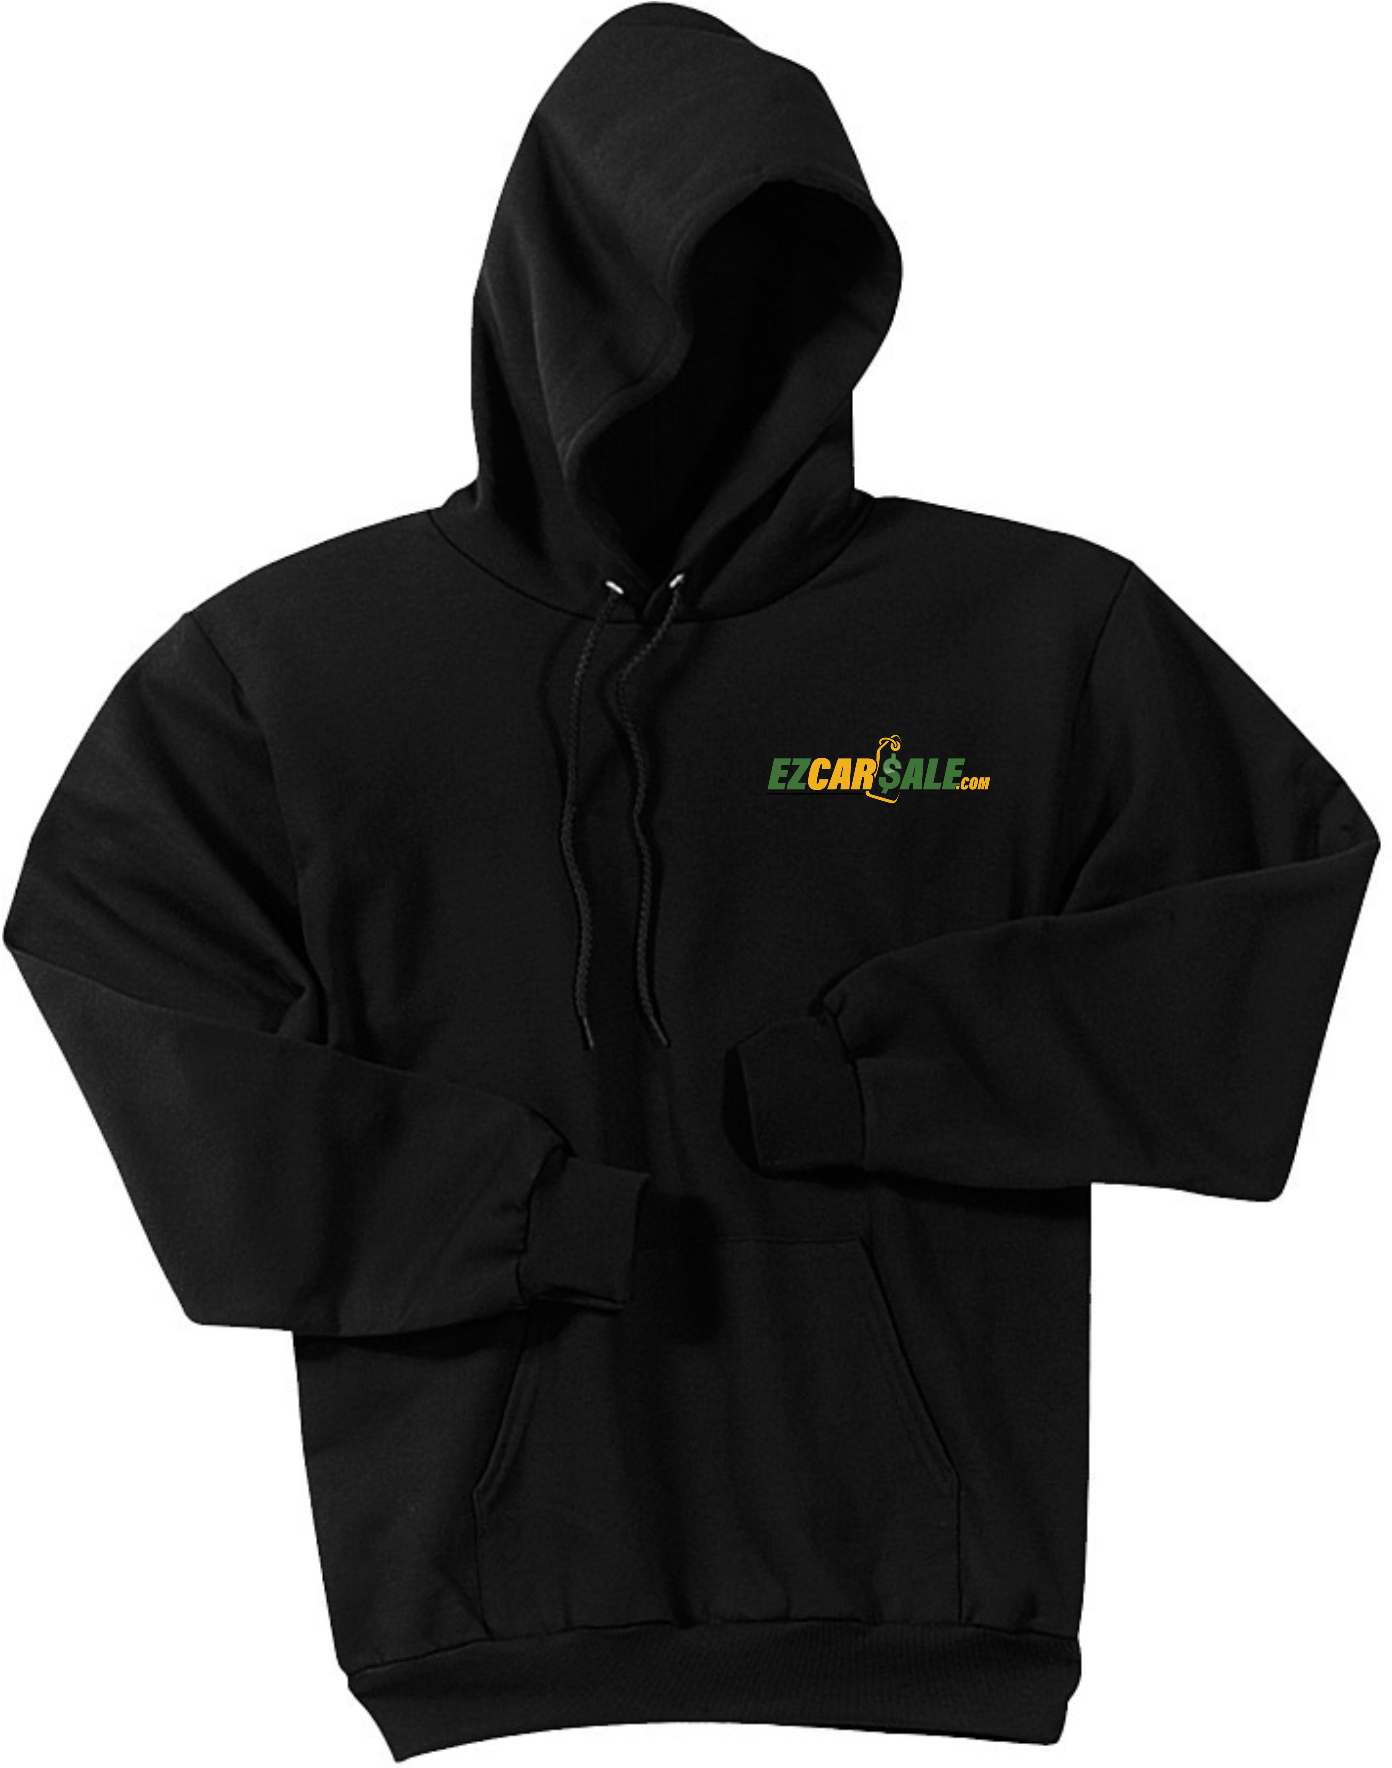 EZCAR$ALE -  PC78H Port & Company® Core Fleece Pullover Hooded Sweatshirt